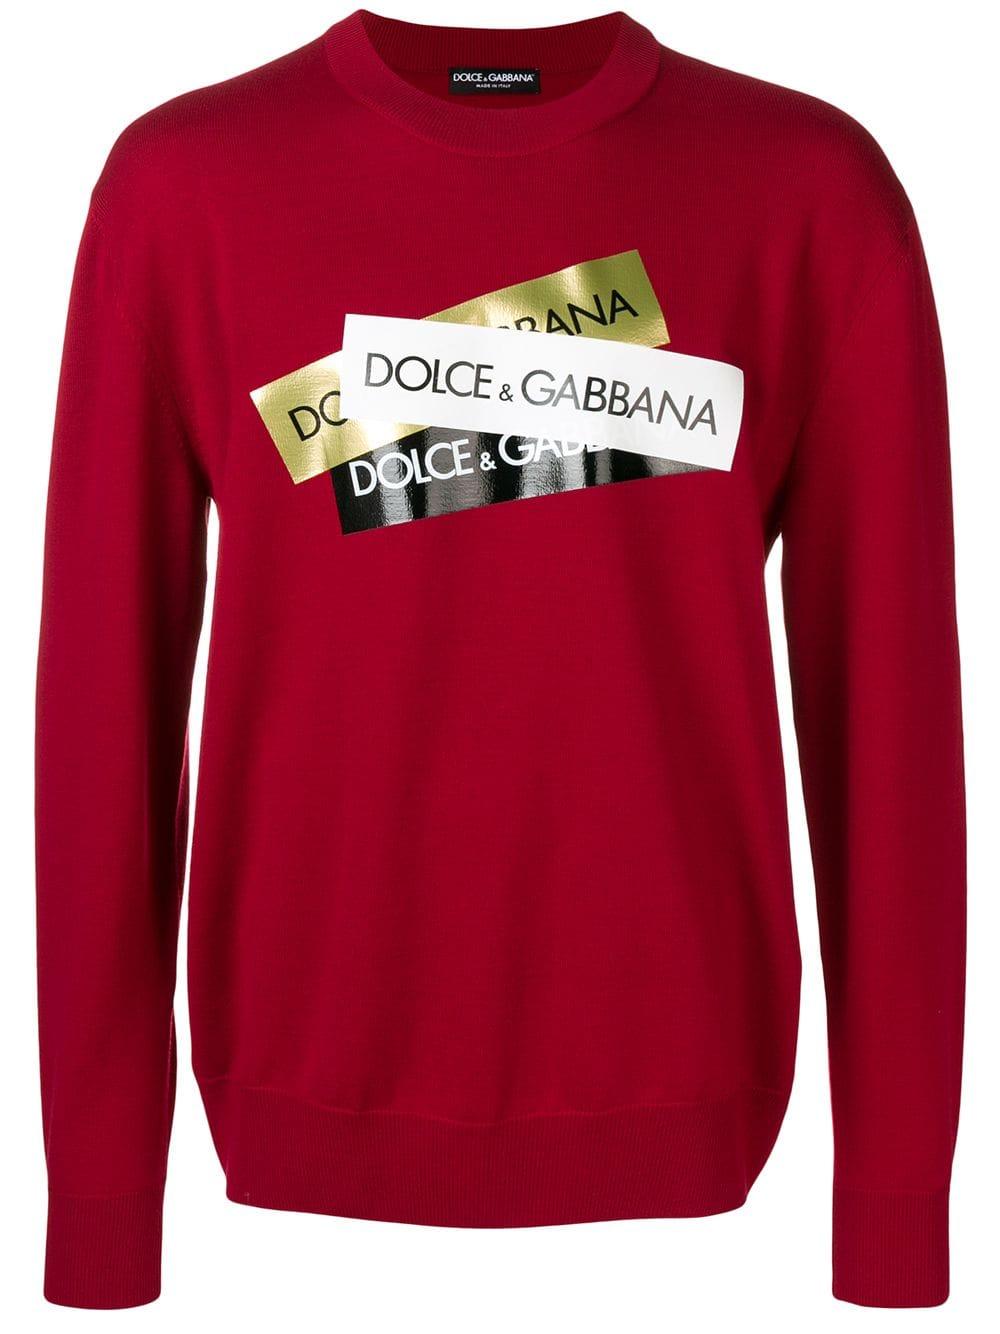 Dolce & Gabbana Cotton Logo Print Sweatshirt in Red for Men - Lyst